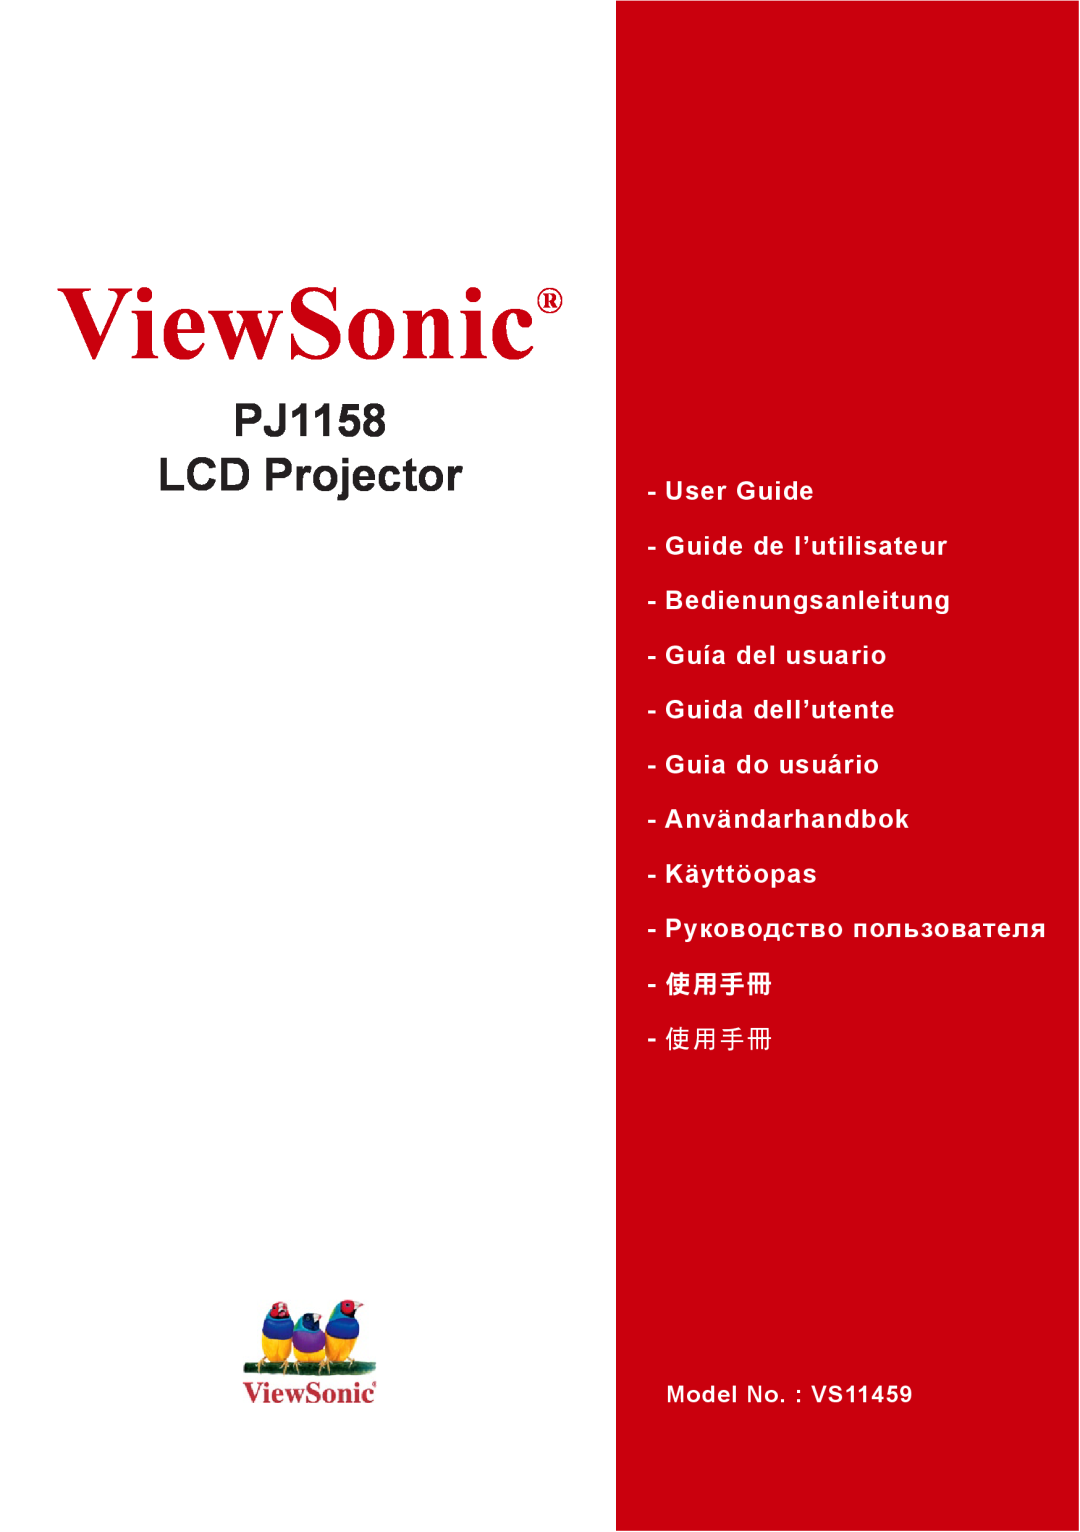 ViewSonic manual ViewSonic, PJ1158 LCD Projector, User Guide Guide de l’utilisateur, 使用手冊 使用手冊, Model No. : VS11459 